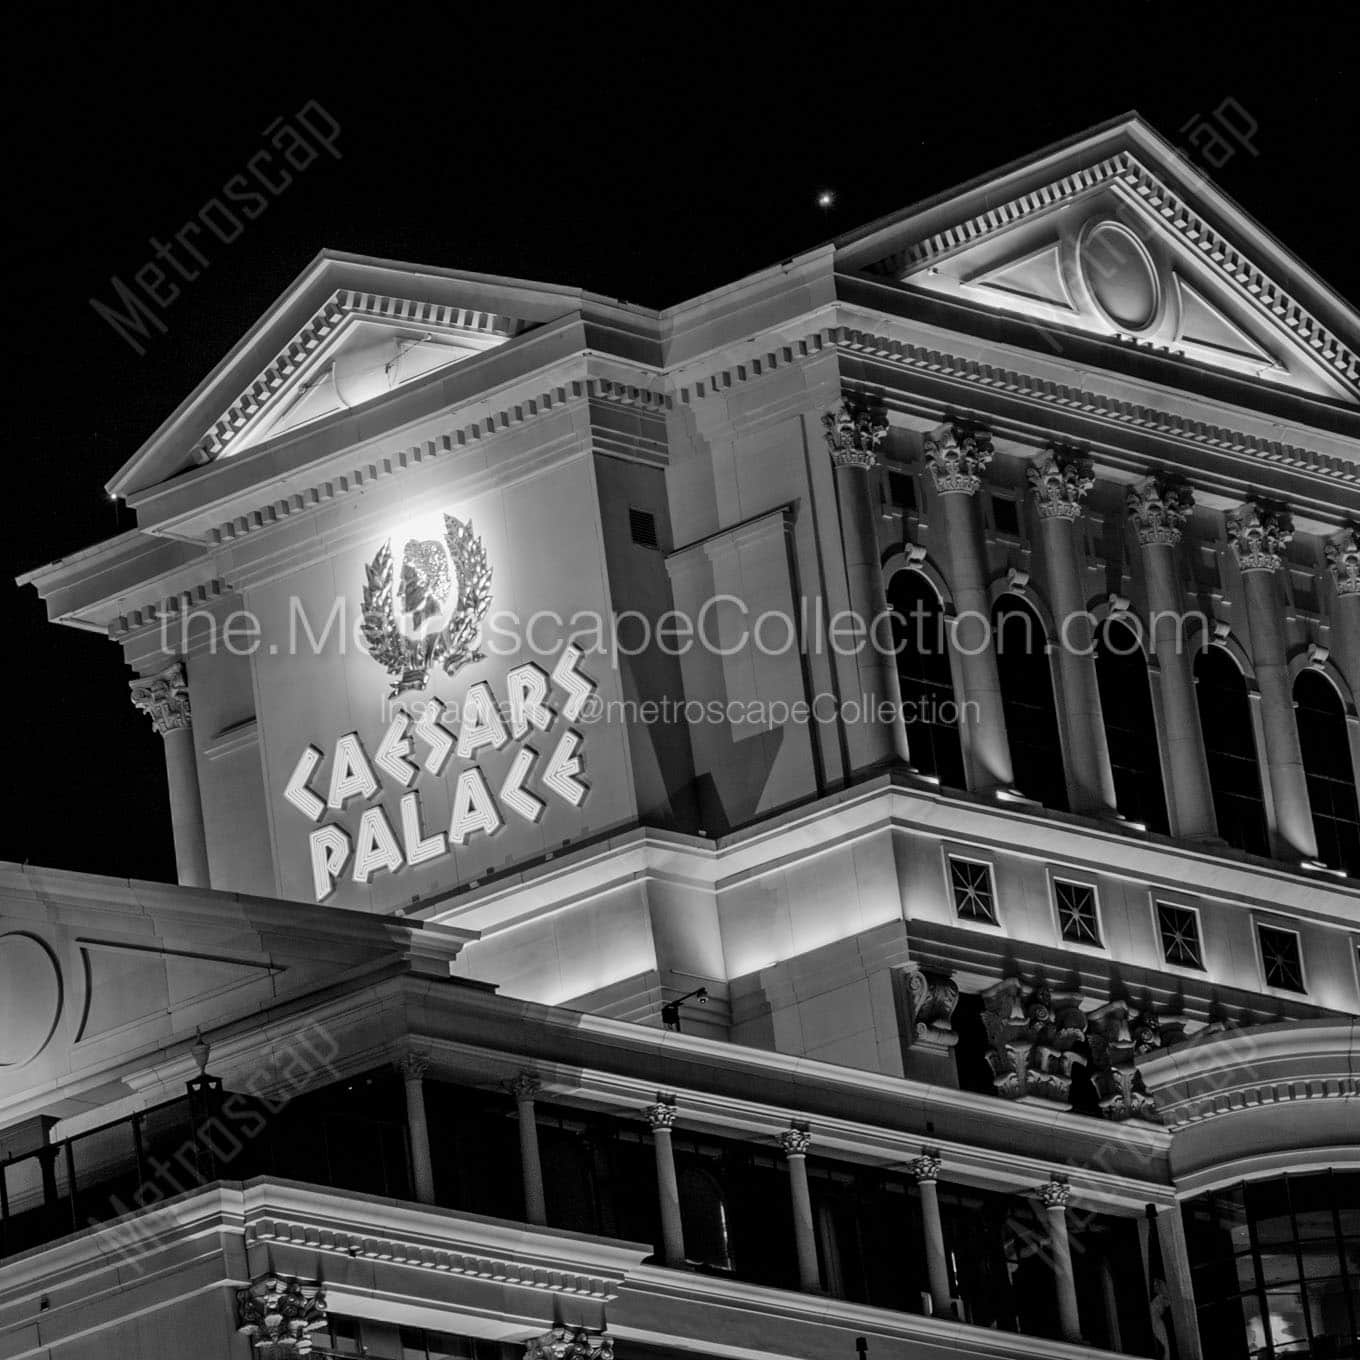 caesars palace at night Black & White Office Art